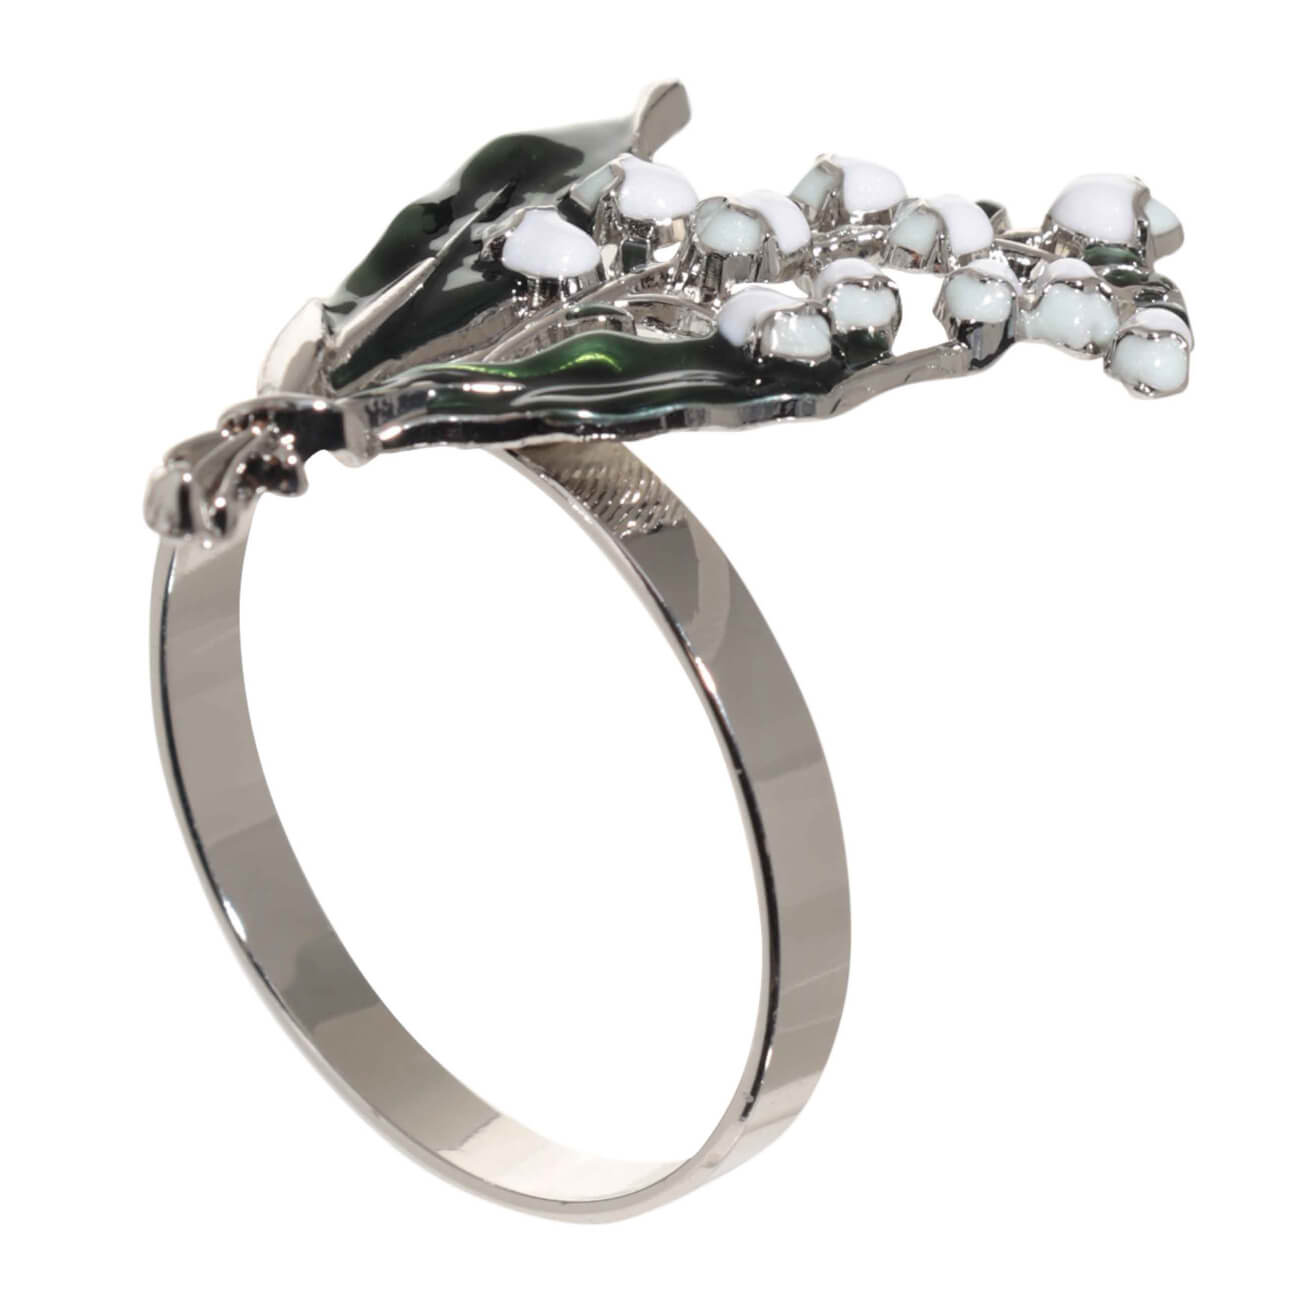 Кольцо для салфеток, 5 см, металл, зелено-серебристое, Ландыш с листьями, May-lily кольцо для карниза d 35 38 мм 10 шт серебряный